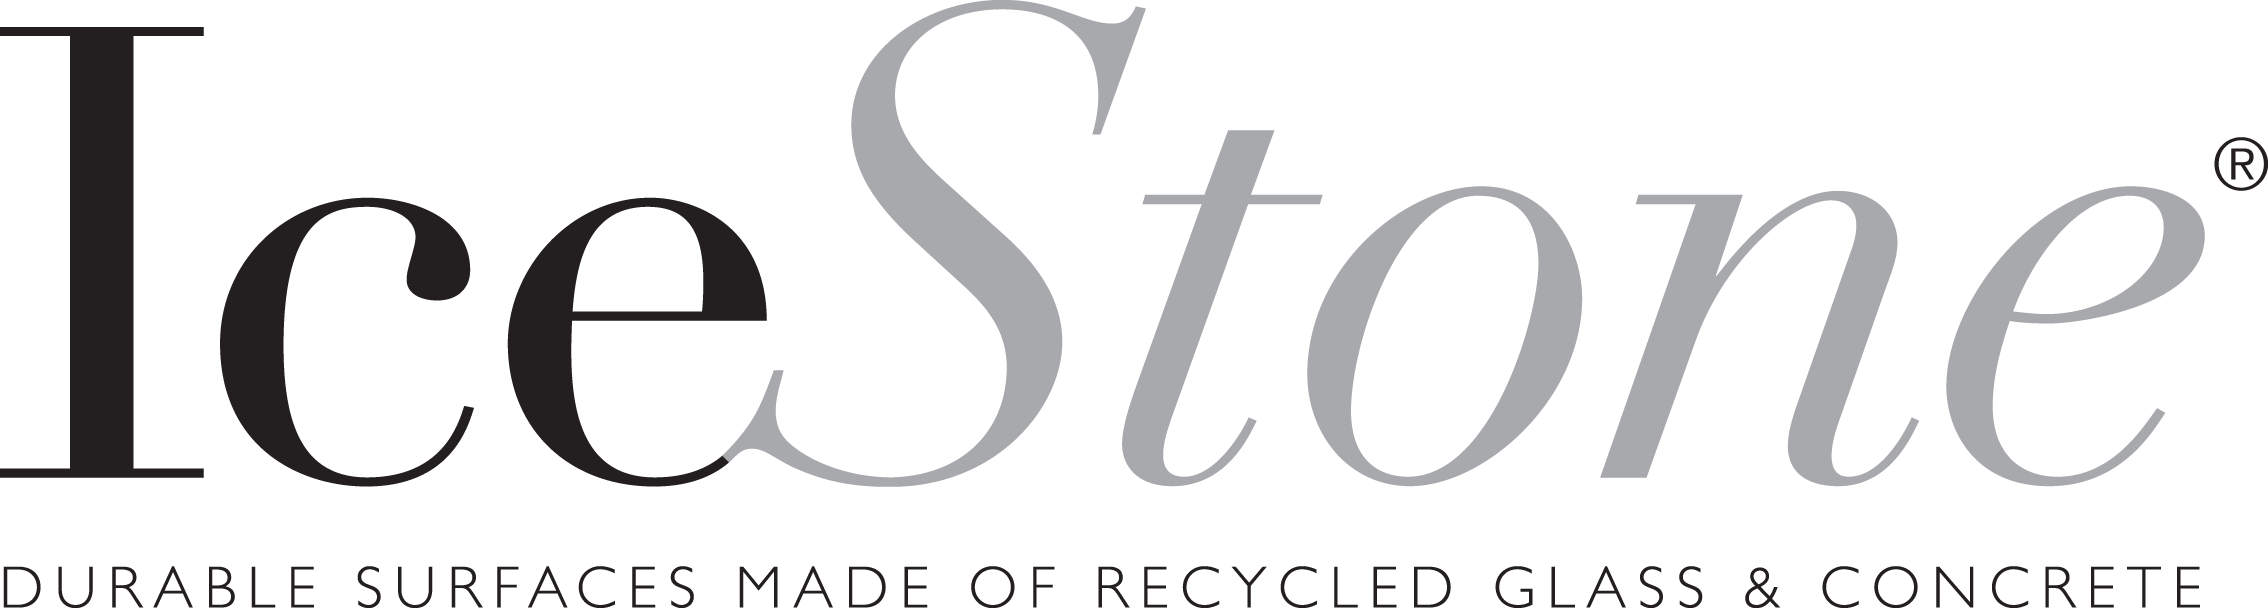 IceStone logo